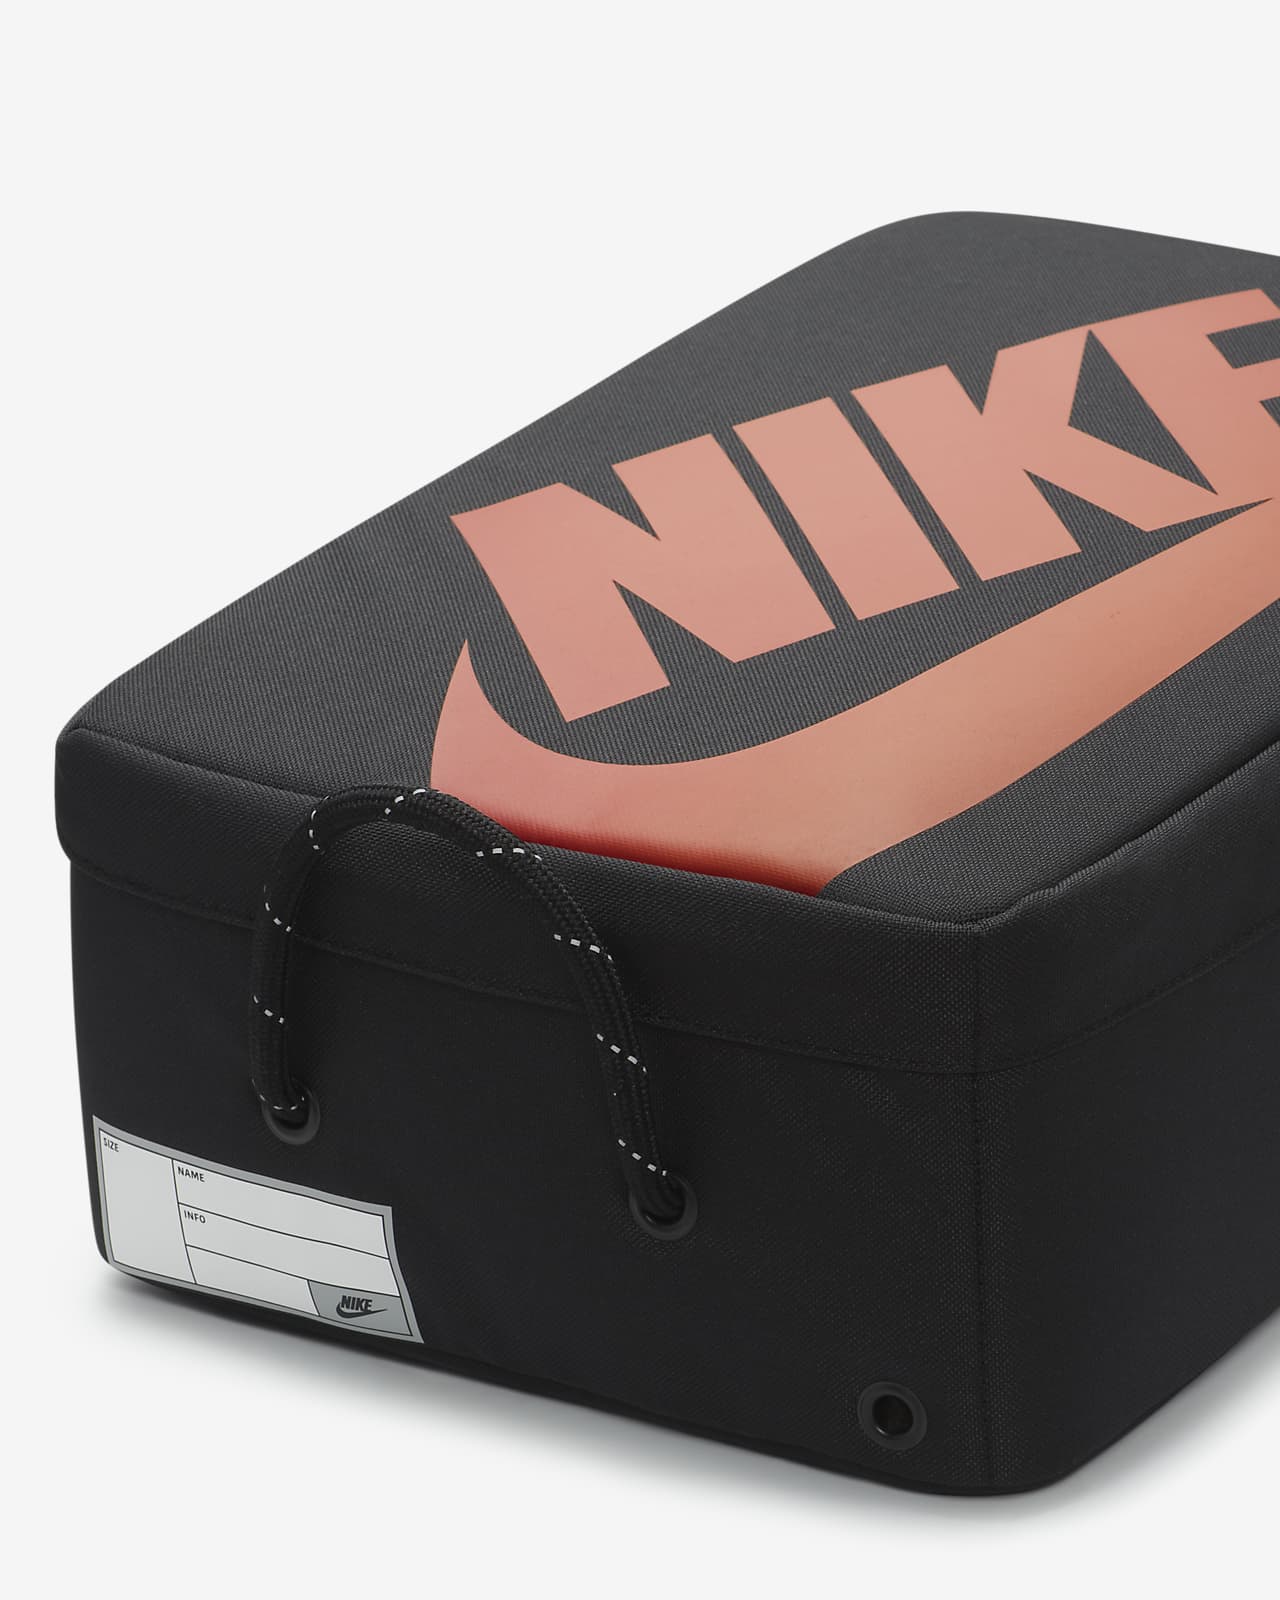 Vend tilbage jøde antenne Nike Shoe Box-taske (12 L). Nike DK